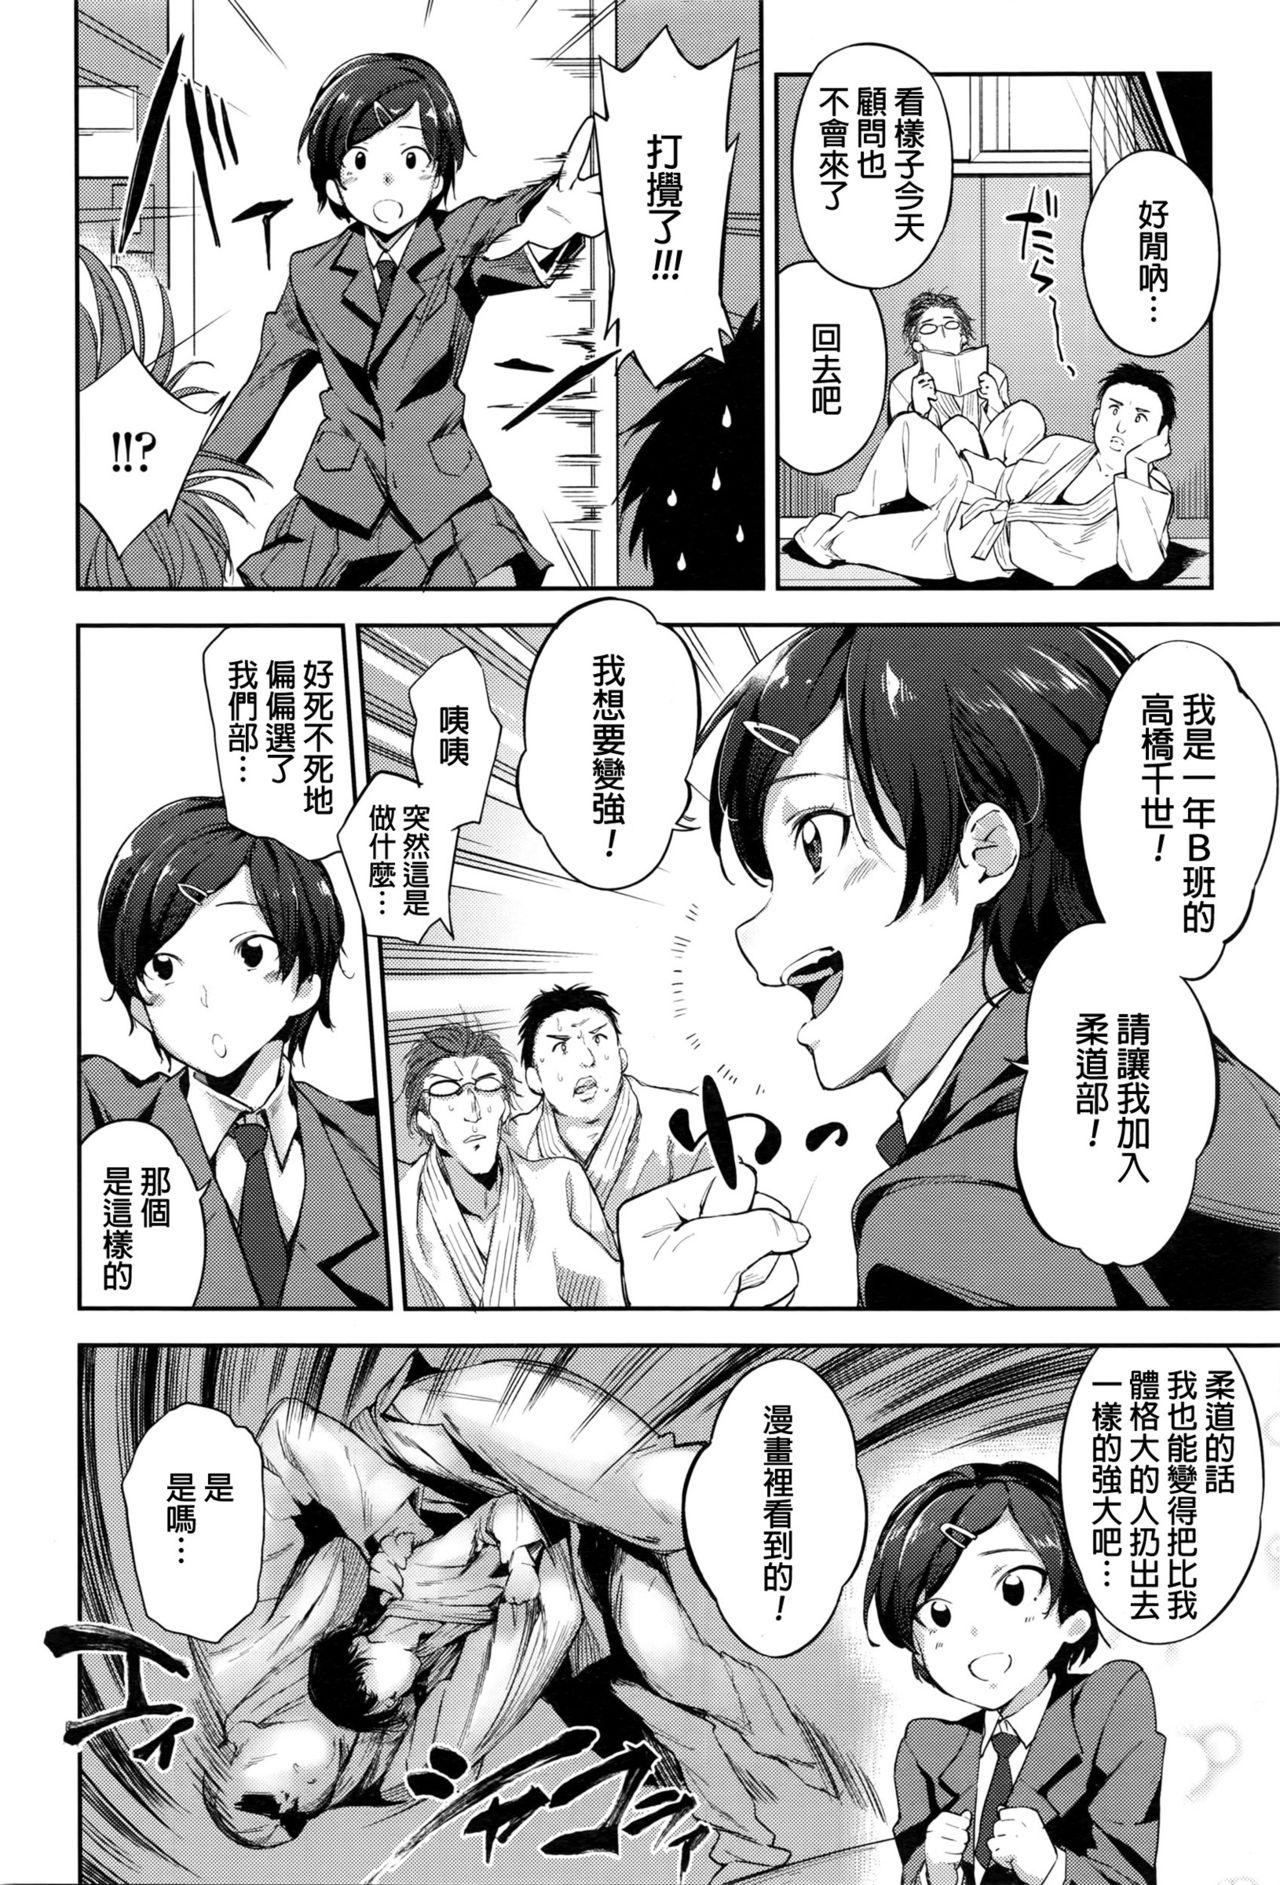 Tit Anoko o Osaekomi! Tease - Page 2